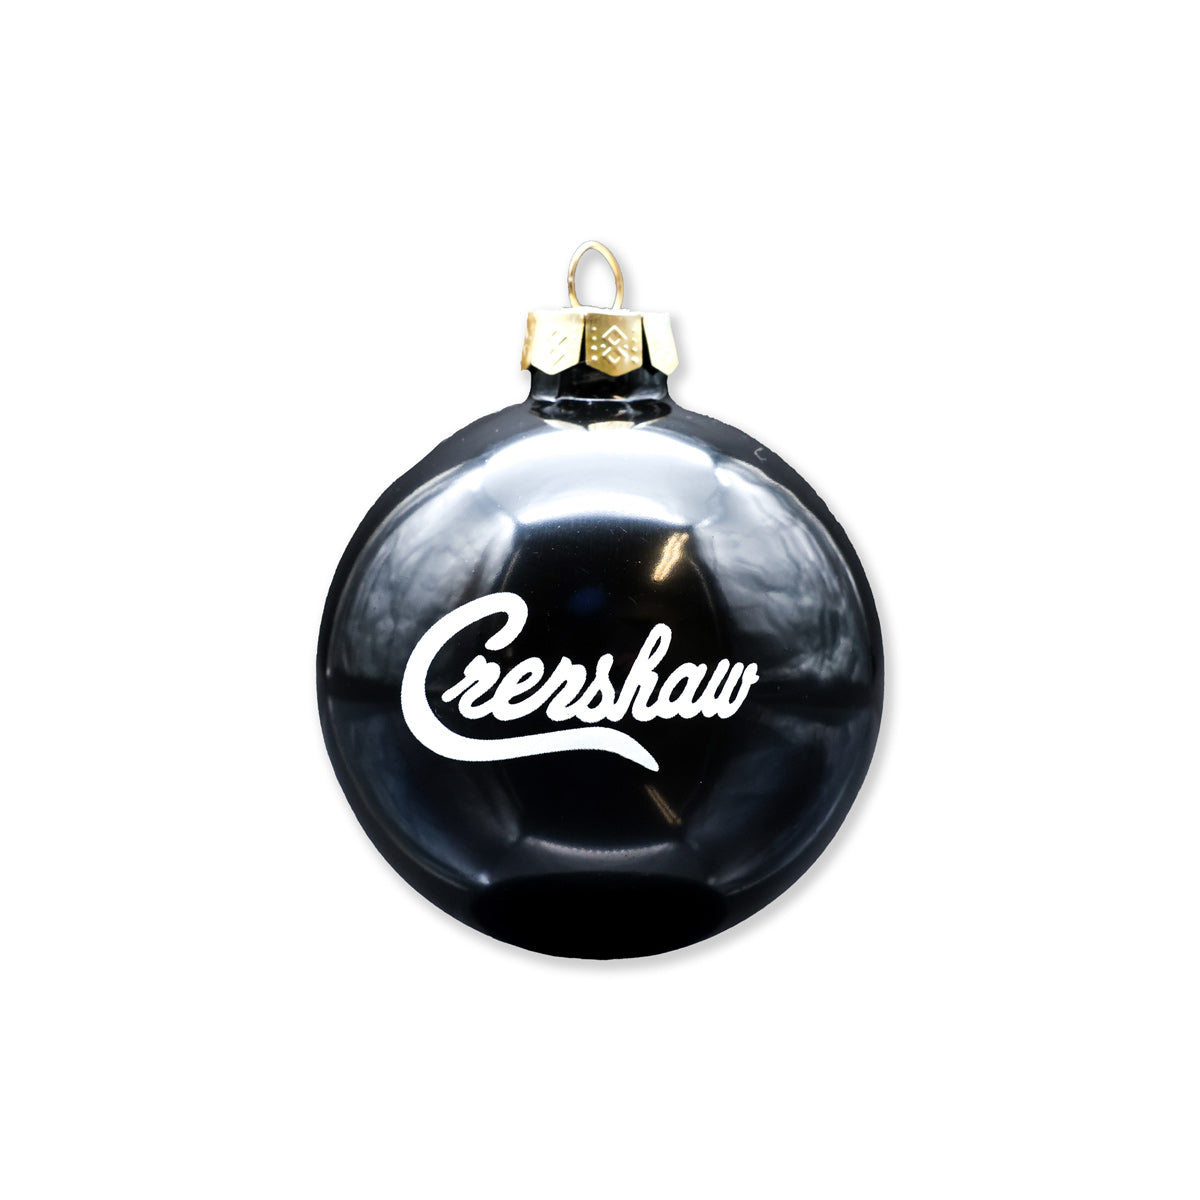 Crenshaw Ornament - Black/White - Detail 3